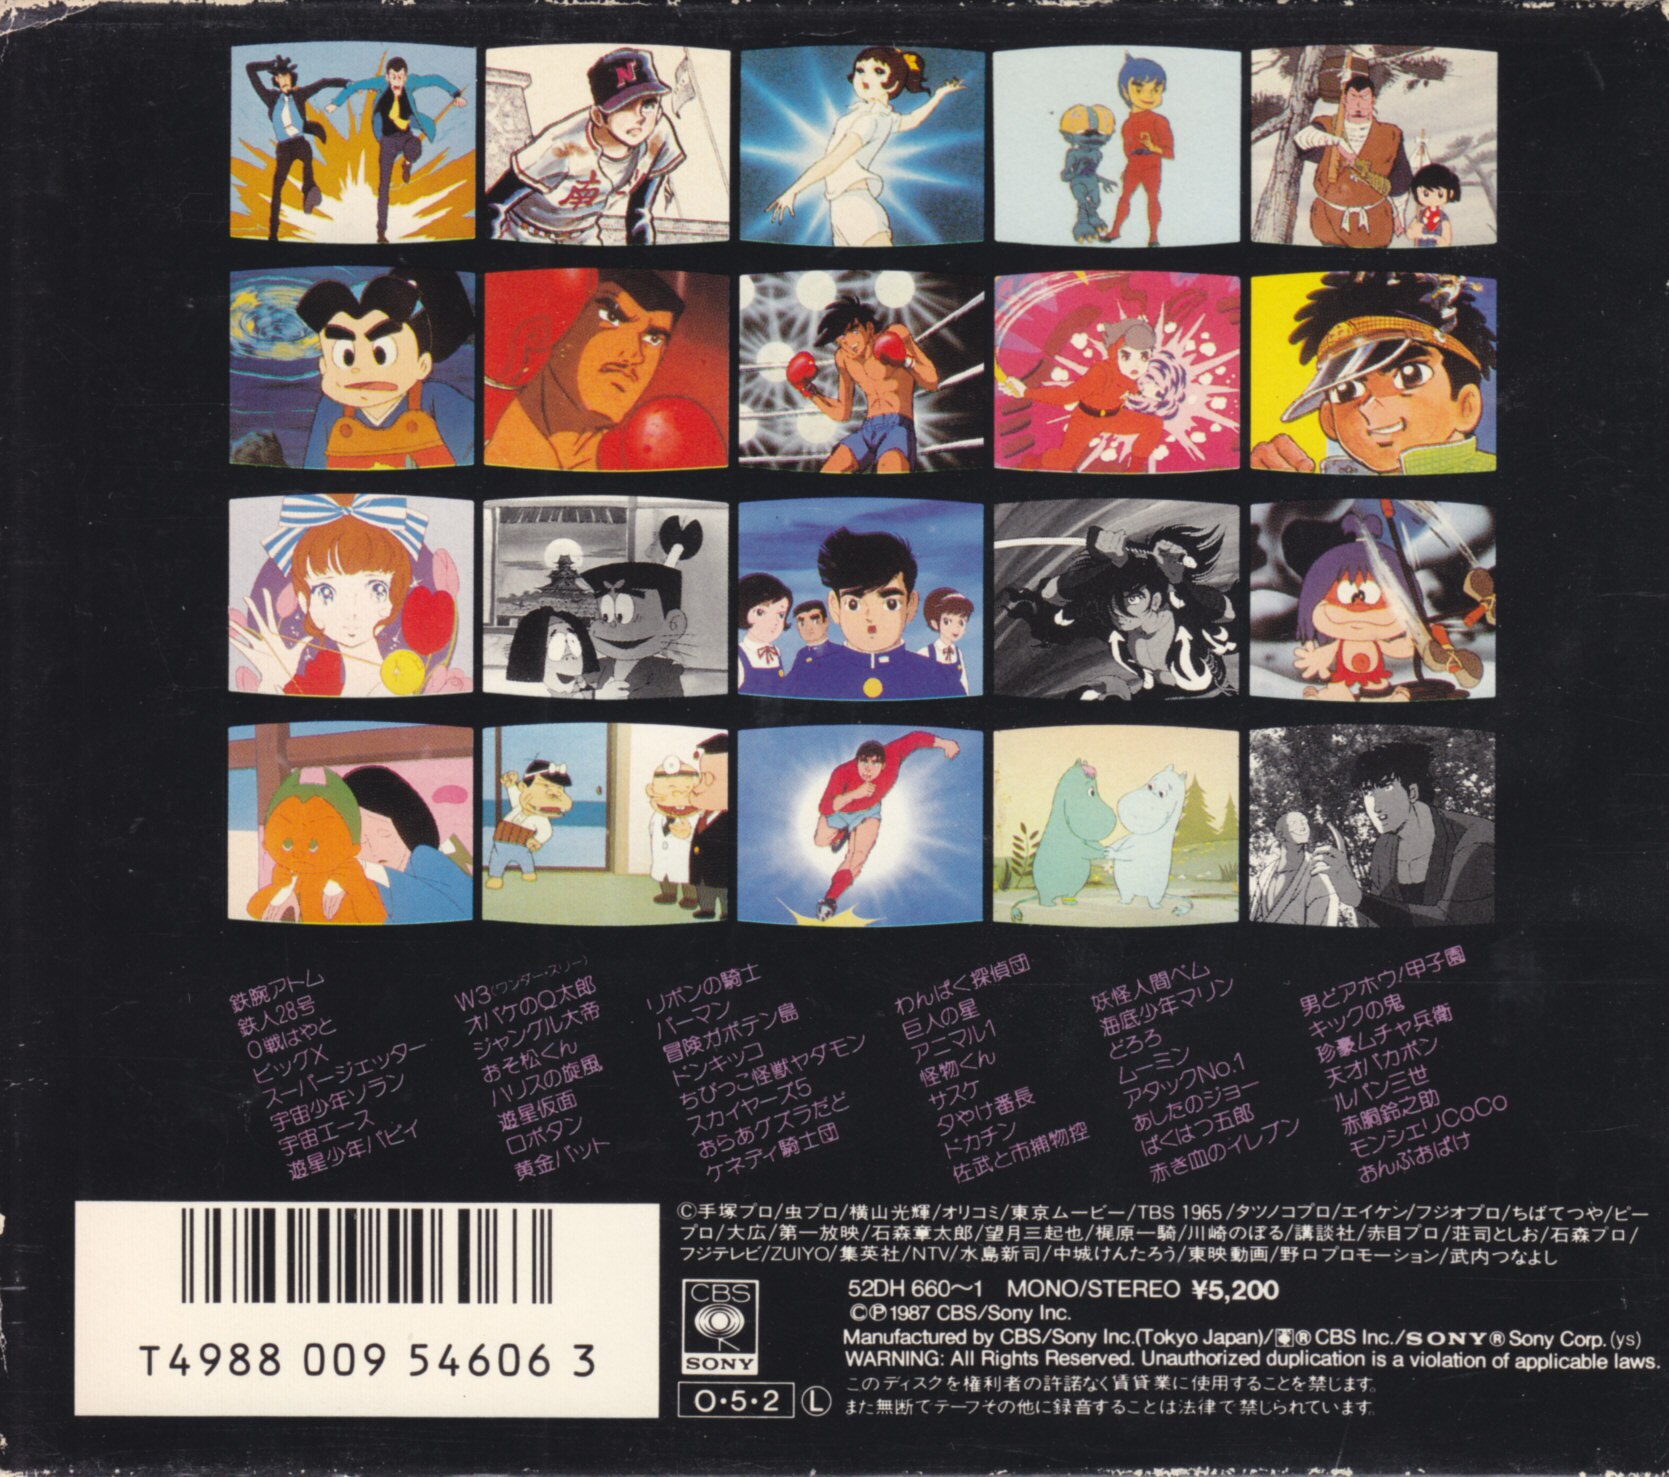 CD　theme　Original　Mandarake　edition　TV　nostalgic　anime　Dai　Zenshuu　Online　Shop